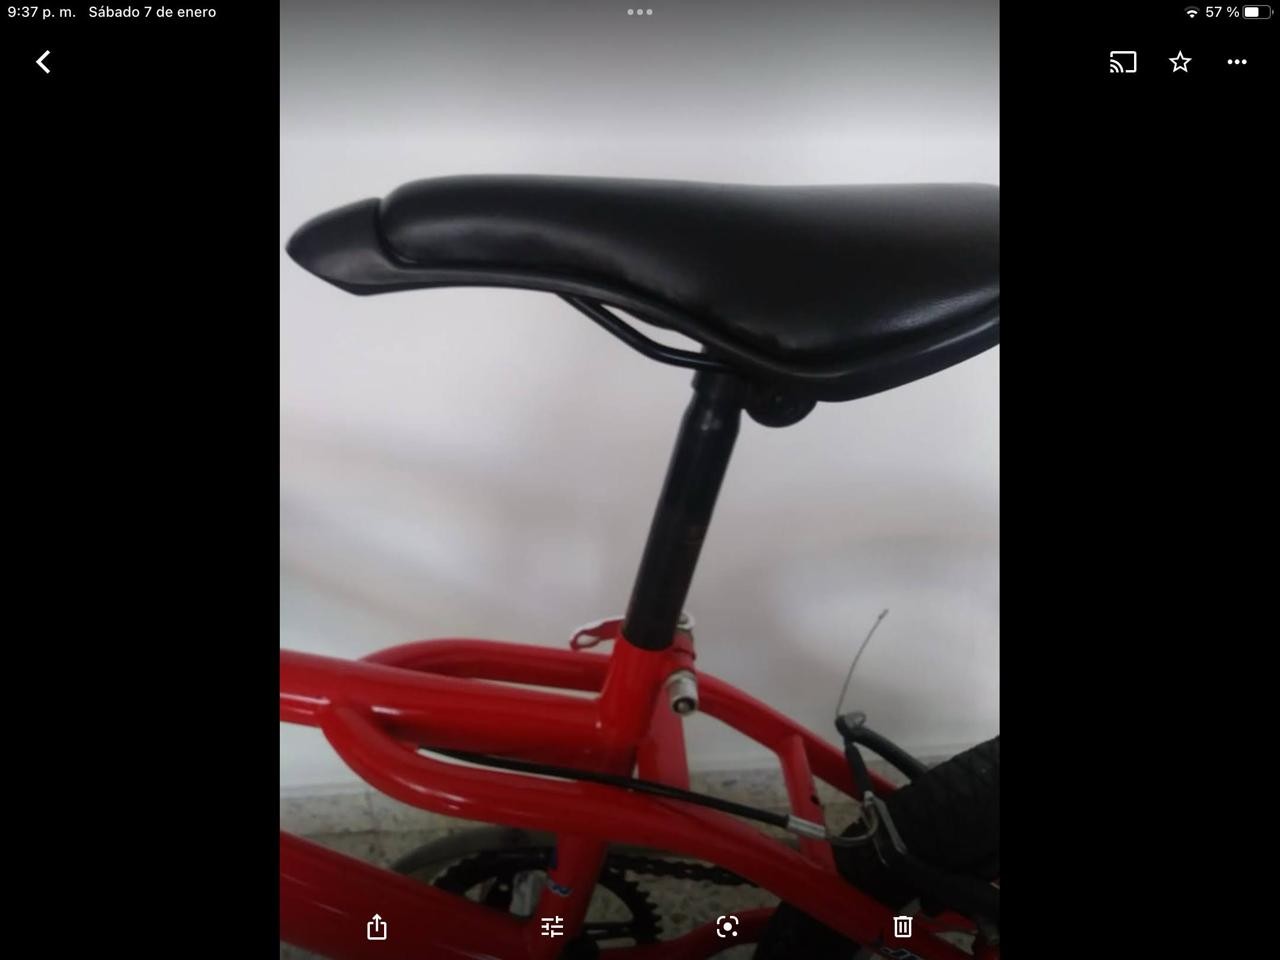 bicicletas y accesorios - Bicicleta Julen Aro 20 4